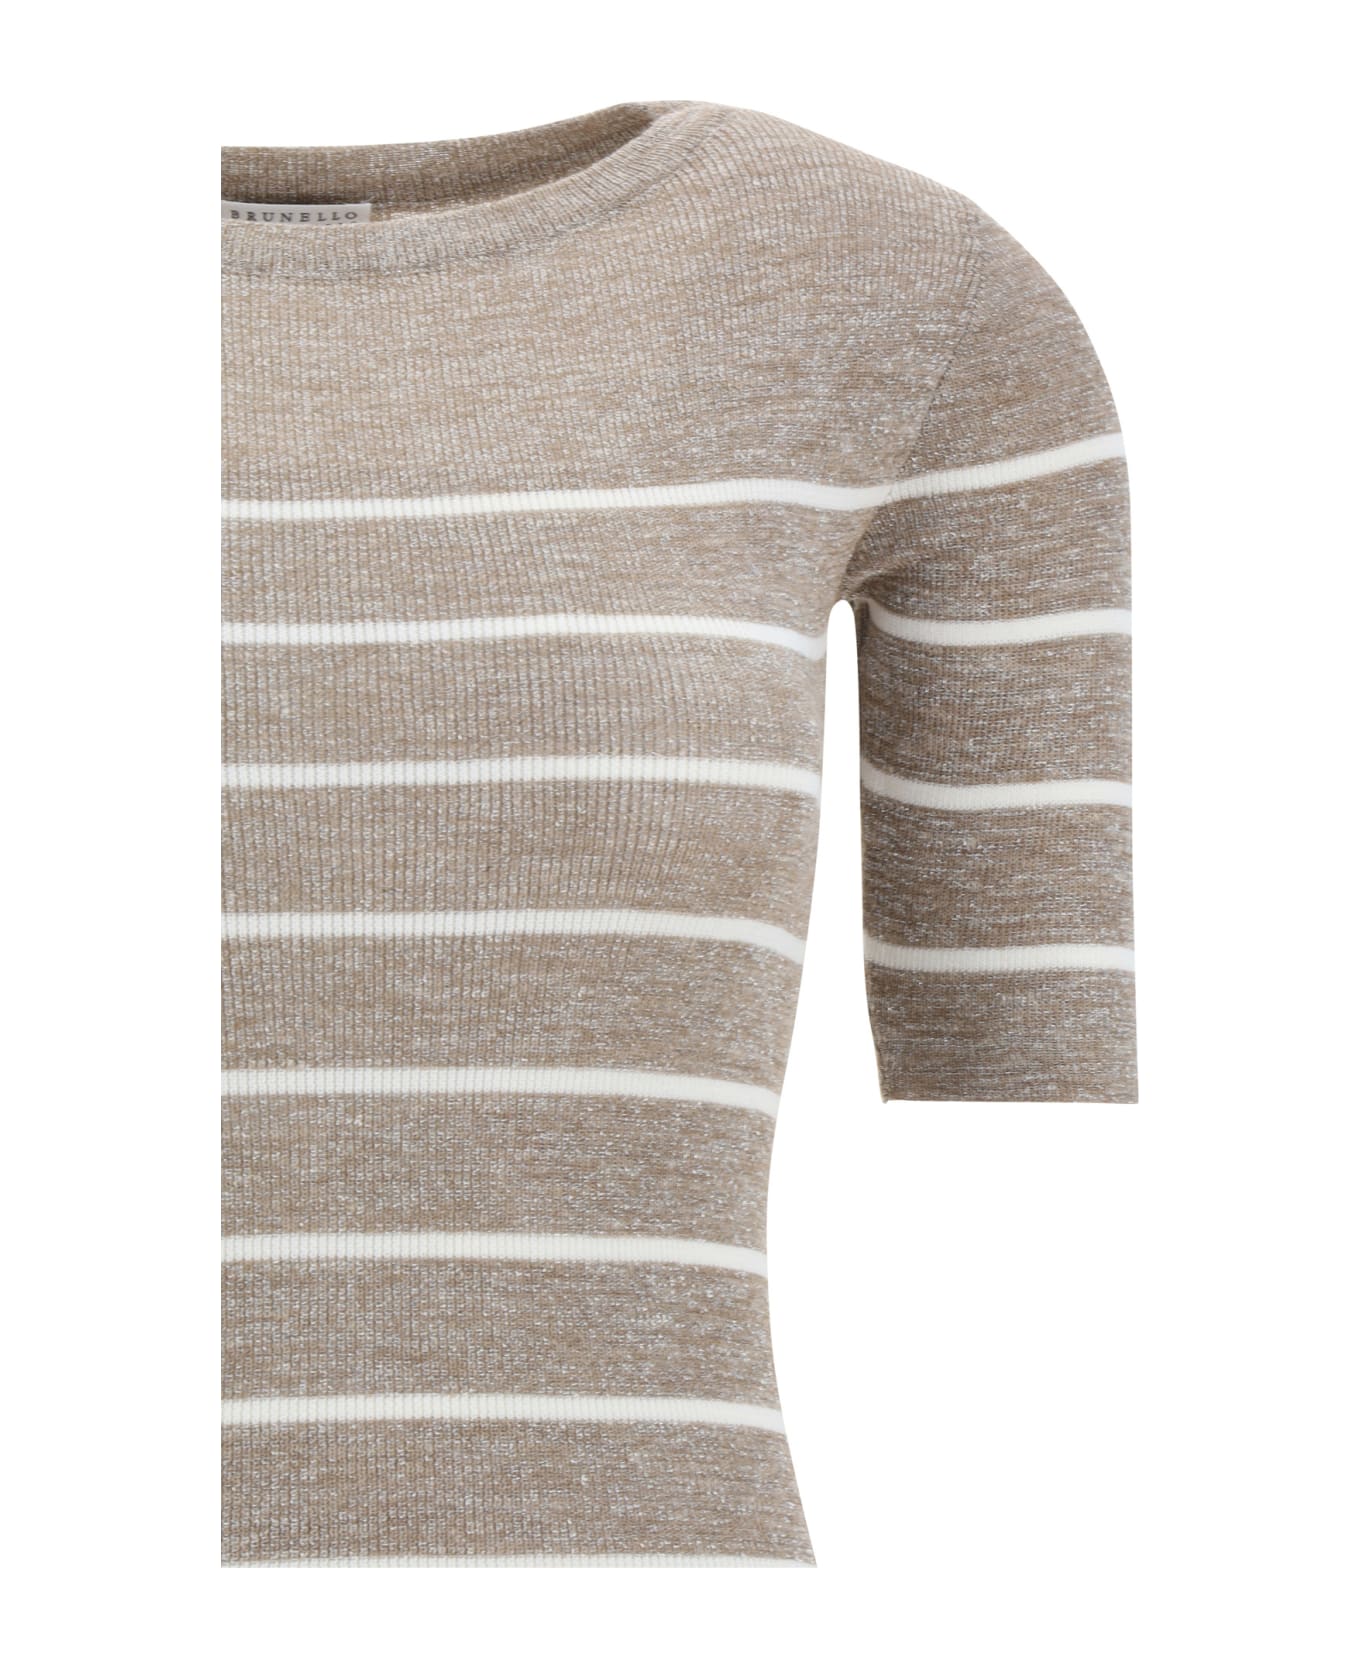 Brunello Cucinelli Lurex Striped Sweater - Cip31